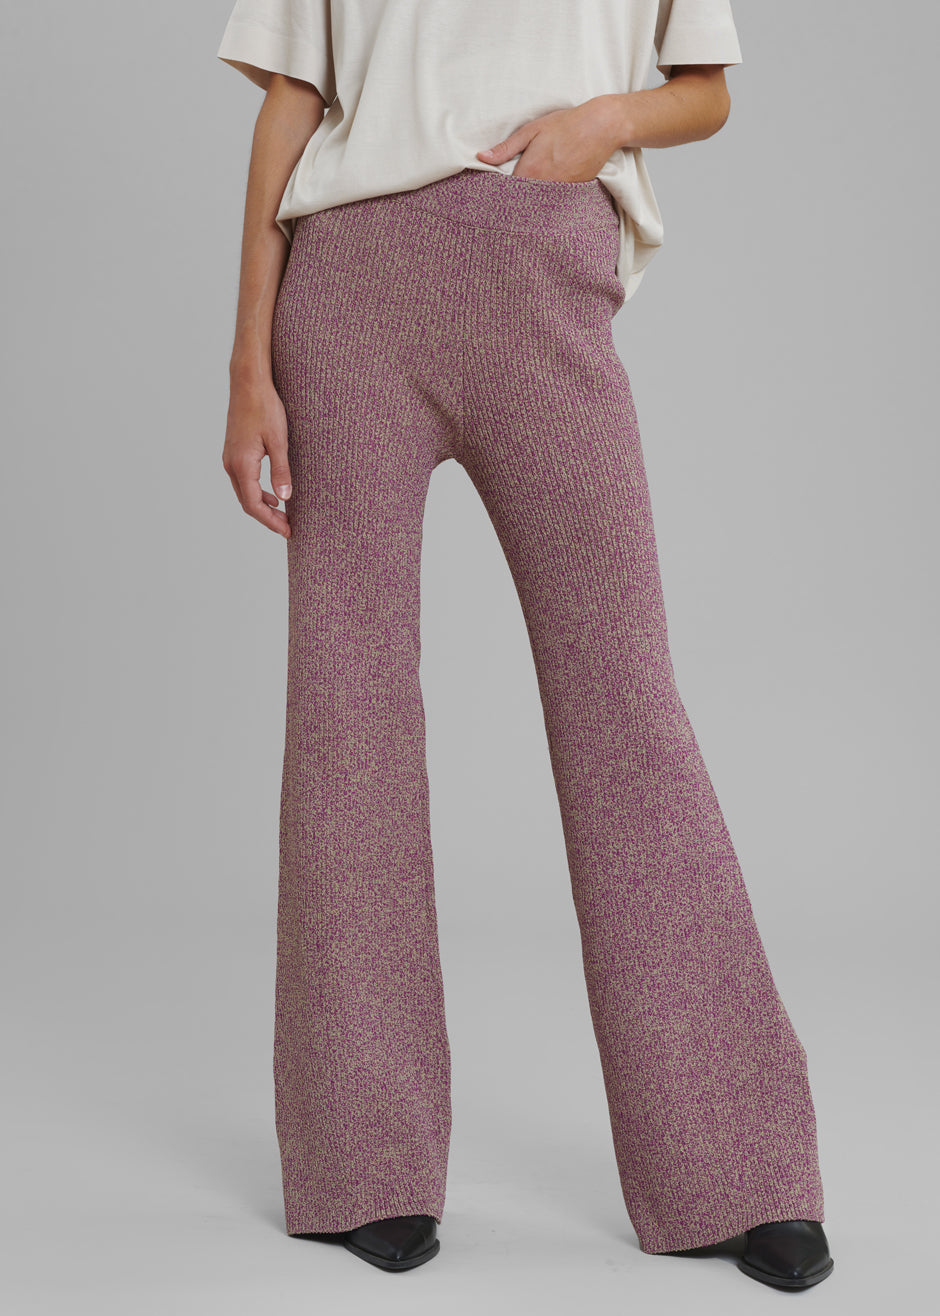 REMAIN Pants Melange Knit Grape Print - Grape Kiss Comb - 3